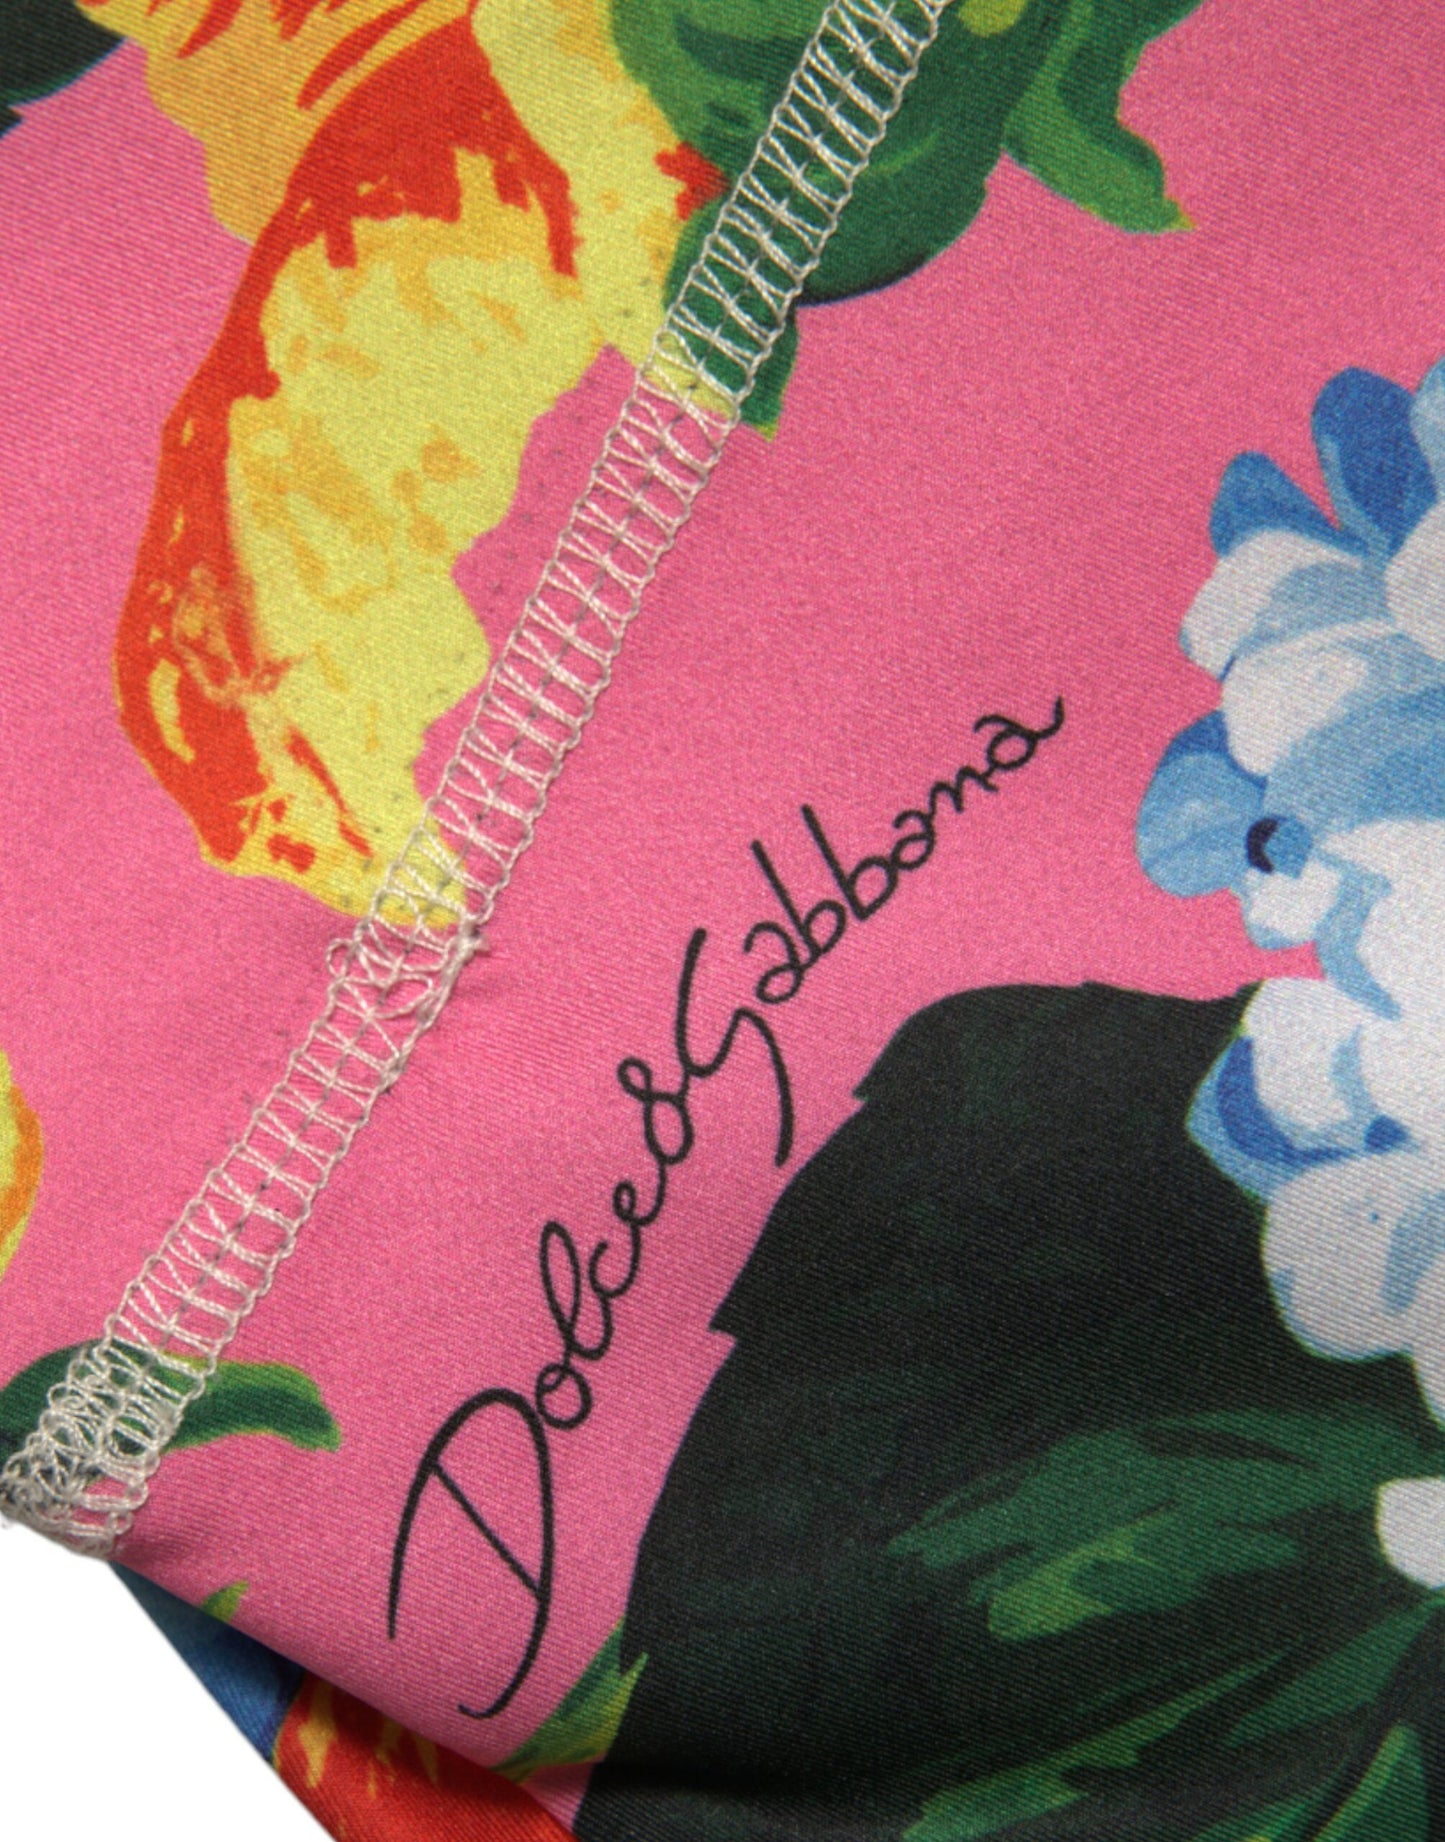 Dolce & Gabbana Multicolor Floral High Waist Leggings Pants - DEA STILOSA MILANO